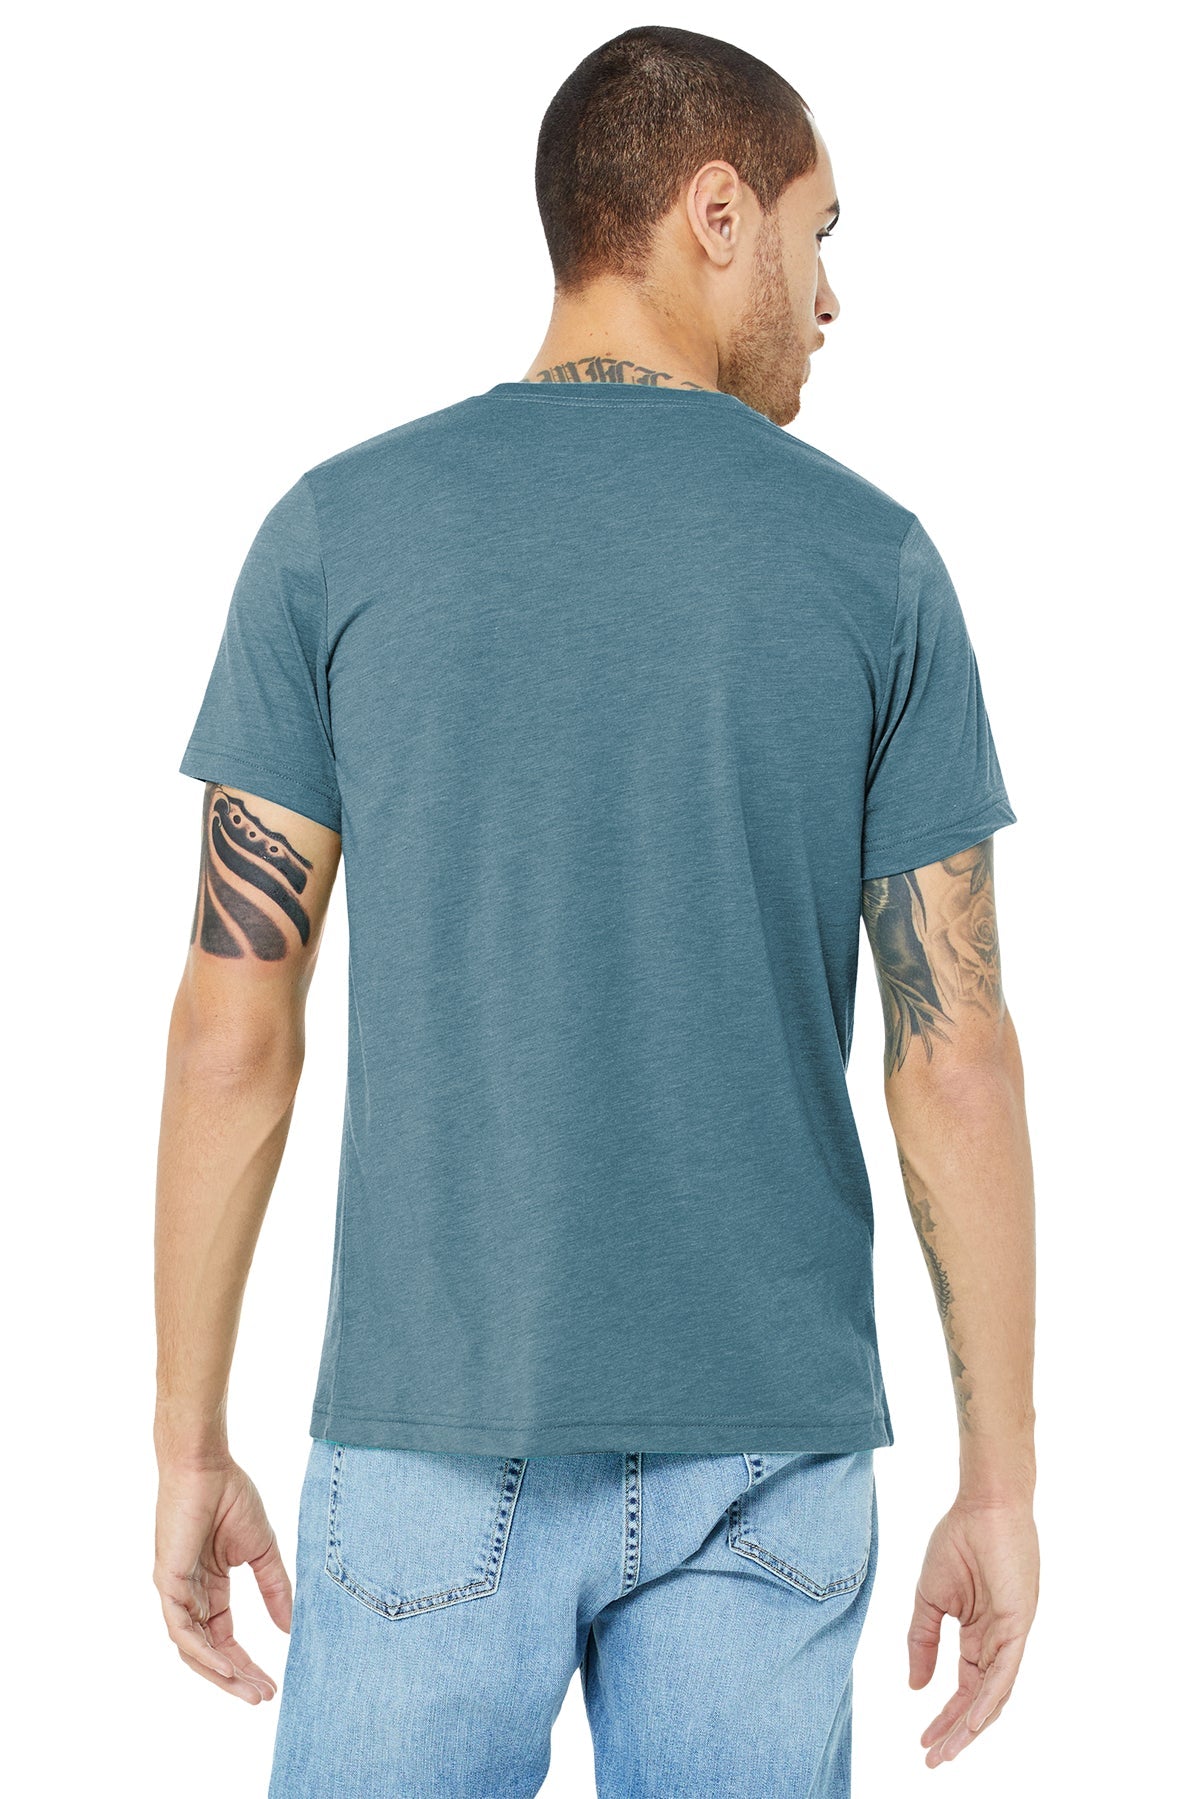 bella + canvas unisex triblend short sleeve t-shirt 3413c denim triblend